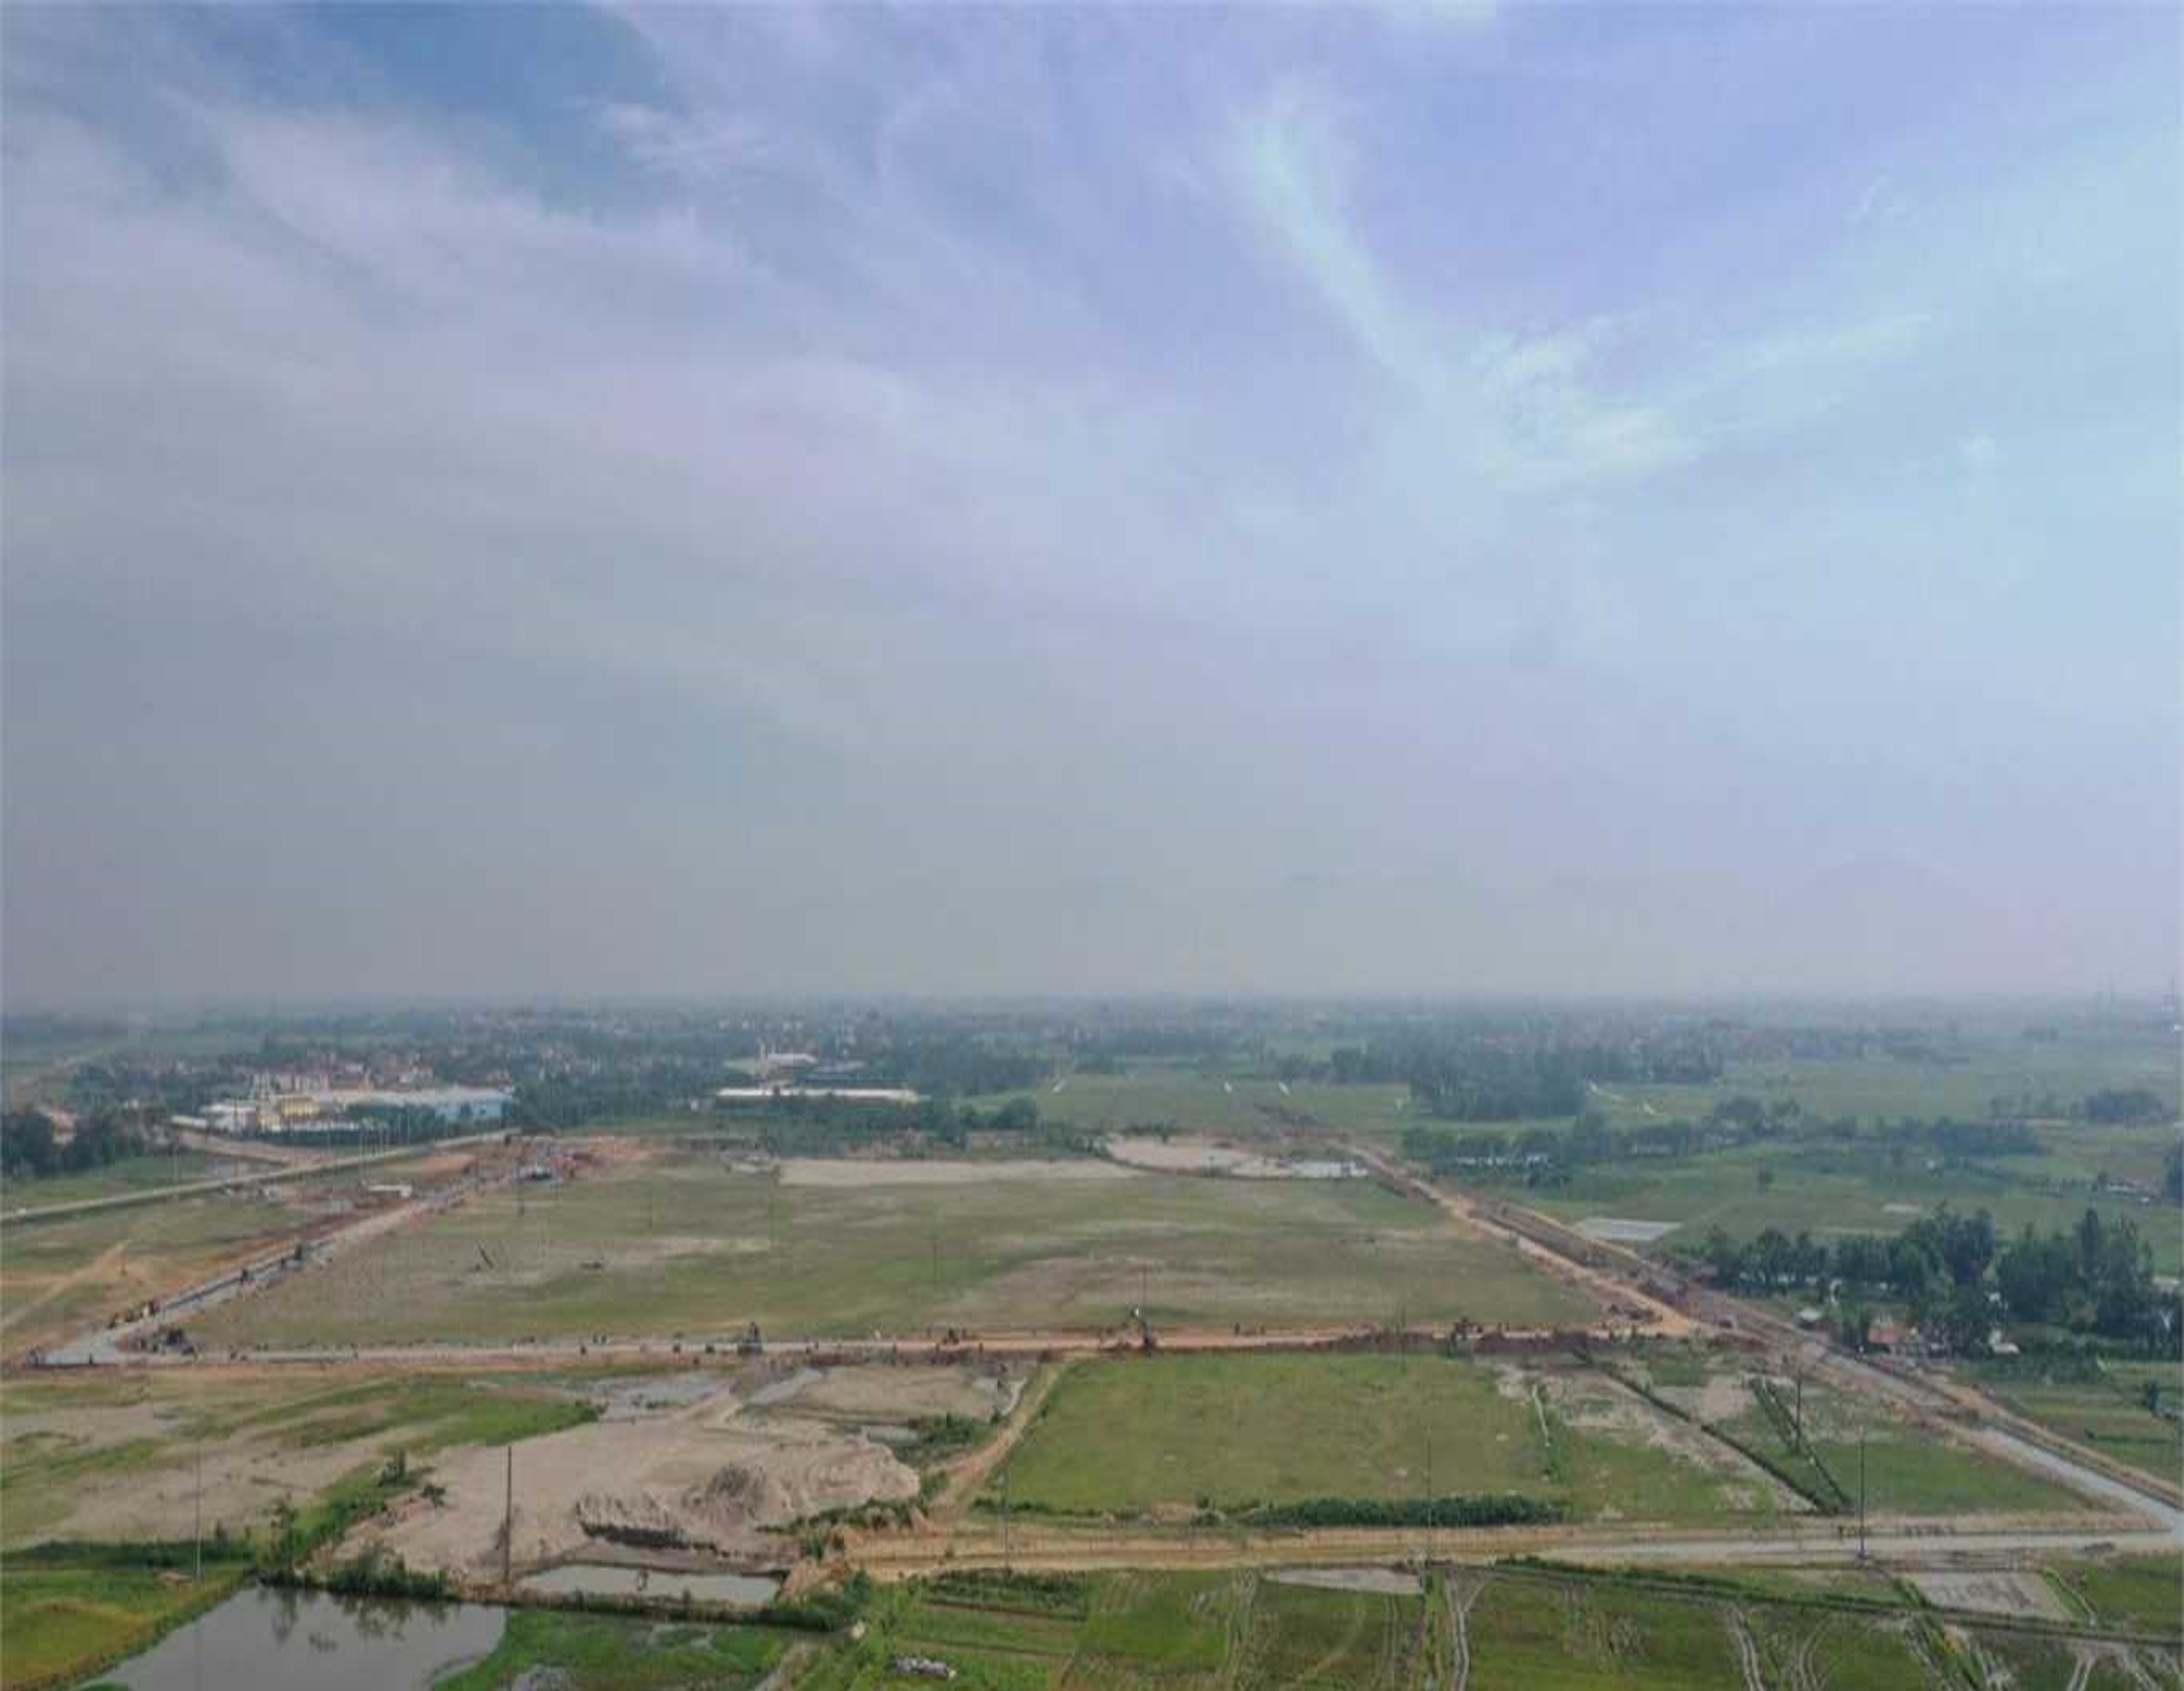 Ba Thien 1 Industrial Park